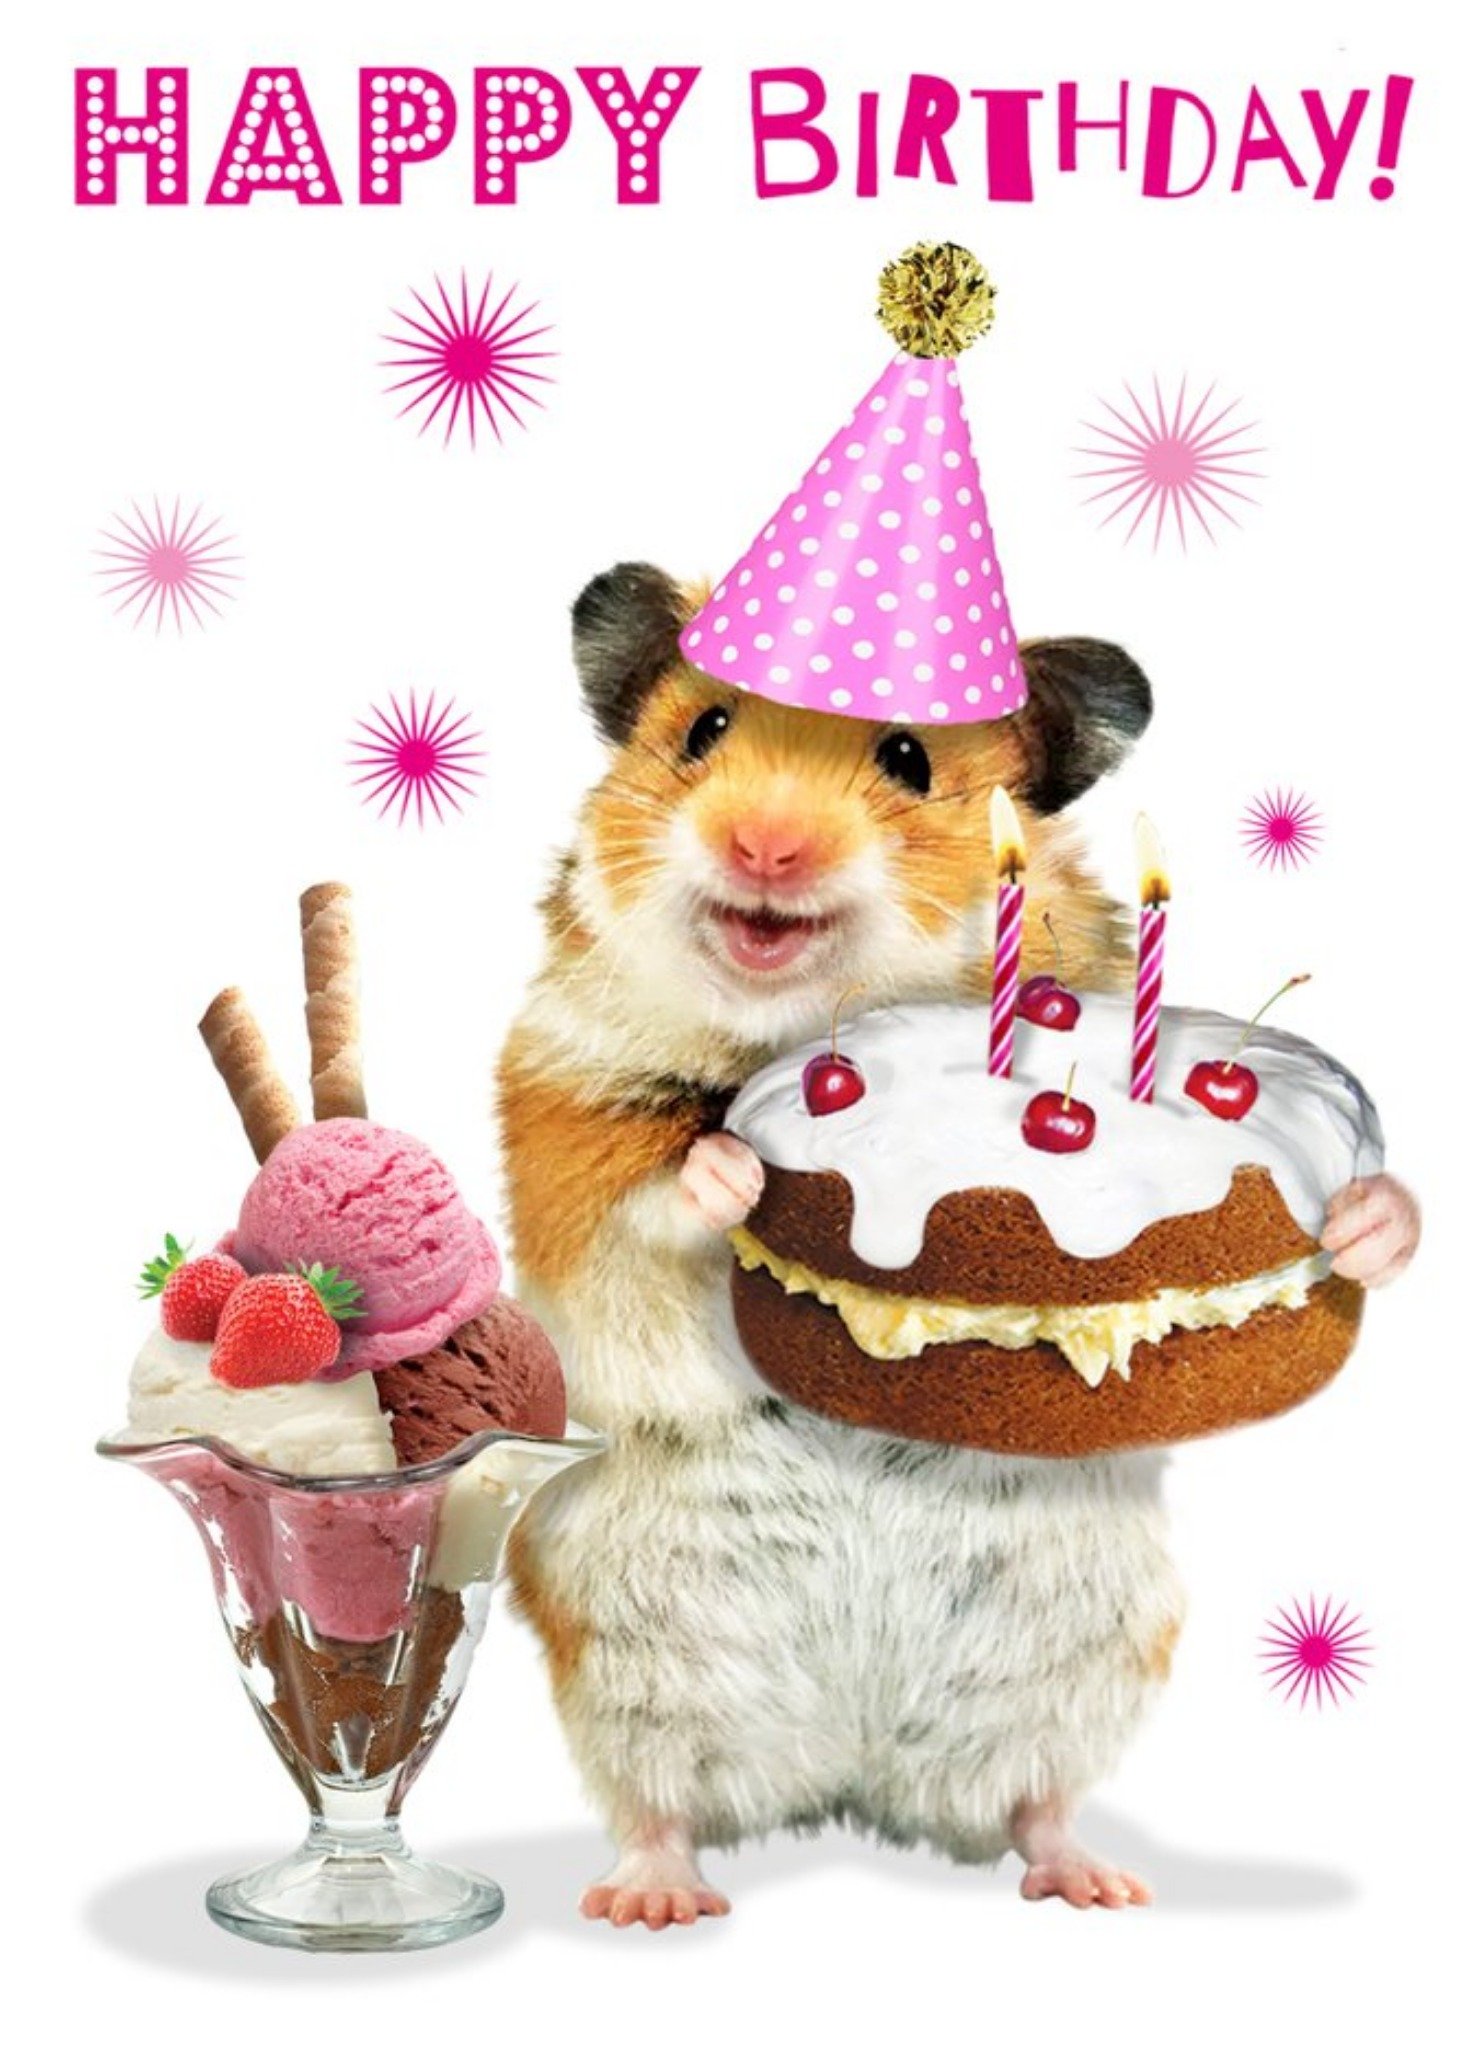 Moonpig Cute Hamster With Cake And Ice Cream Sundae Birthday Card Ecard